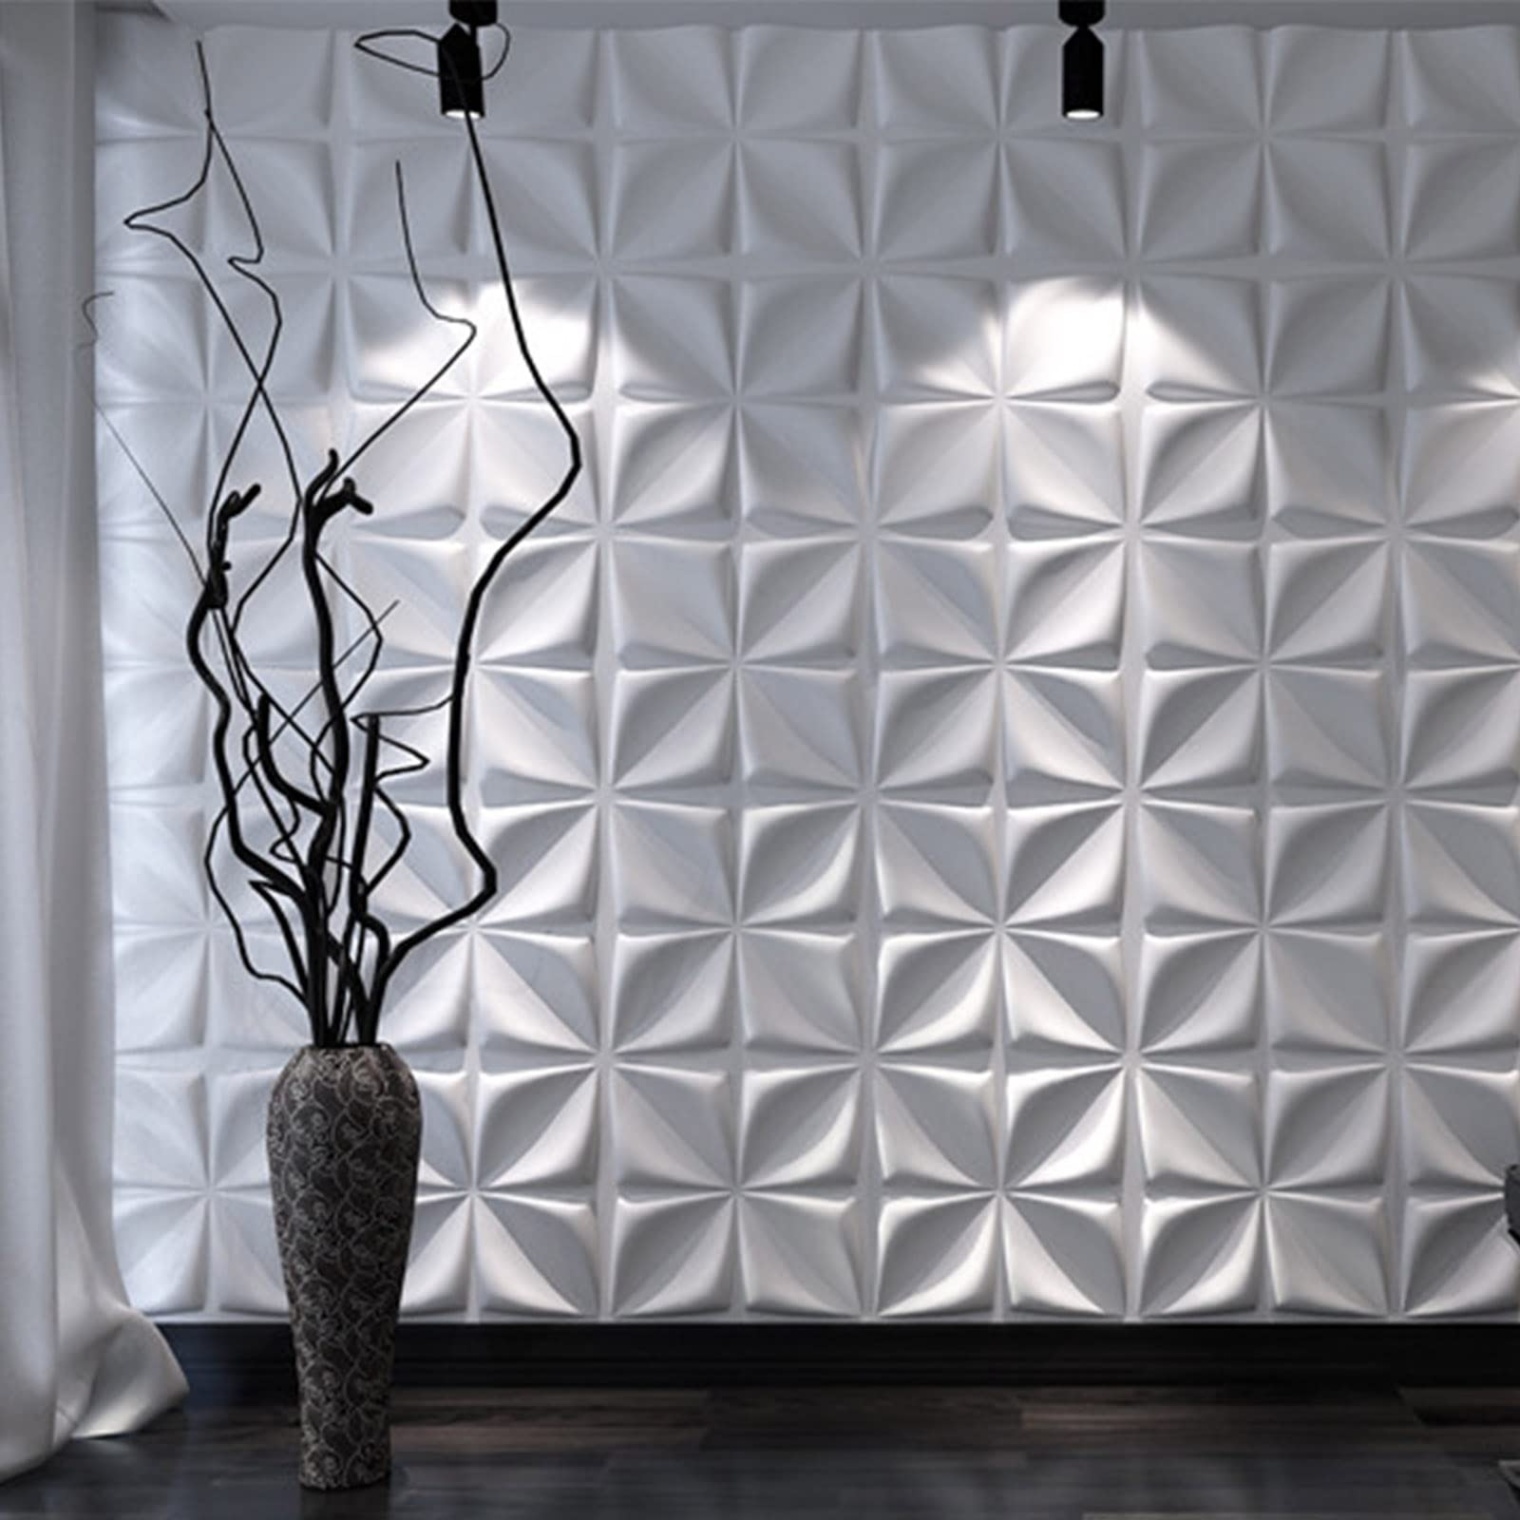 3d wall decorative panels Bulan 1 Artd Decorative D Wall Panels Textured D Wall Covering, White,  Tiles  2 Sq Ft